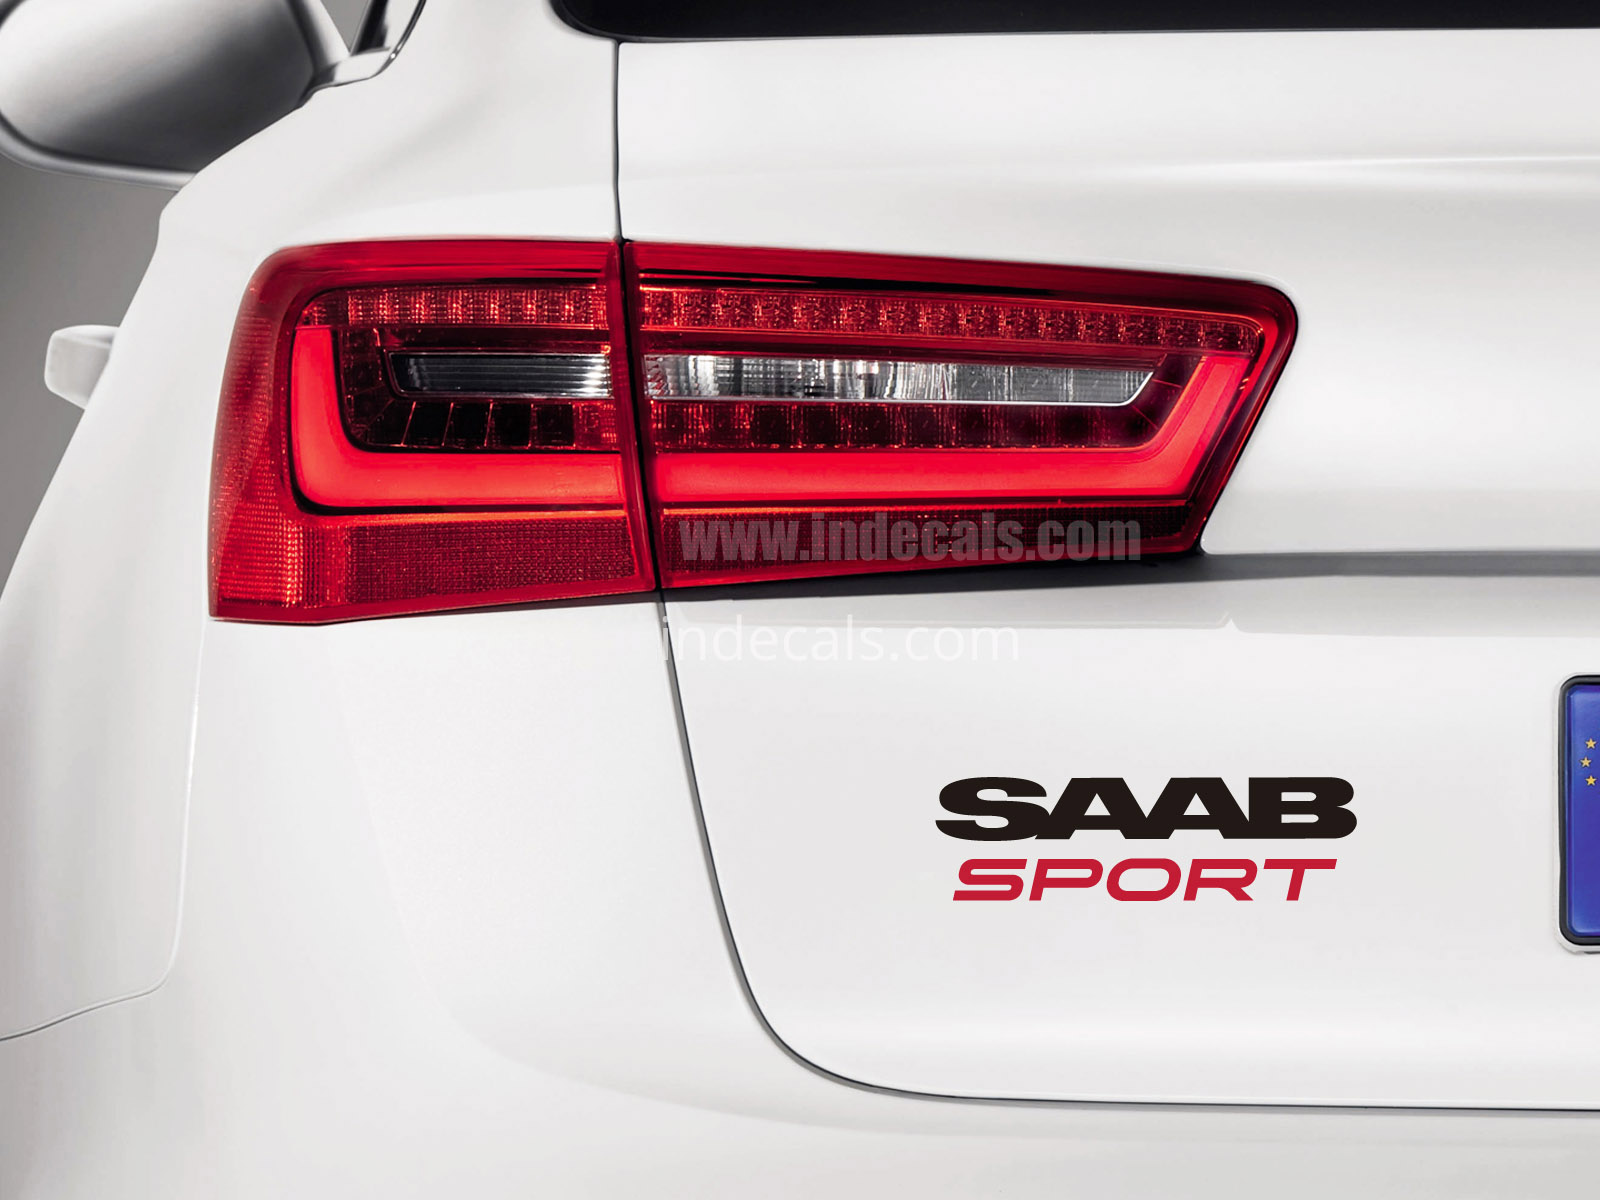 1 x Saab Sports Sticker for Trunk - Black & Red